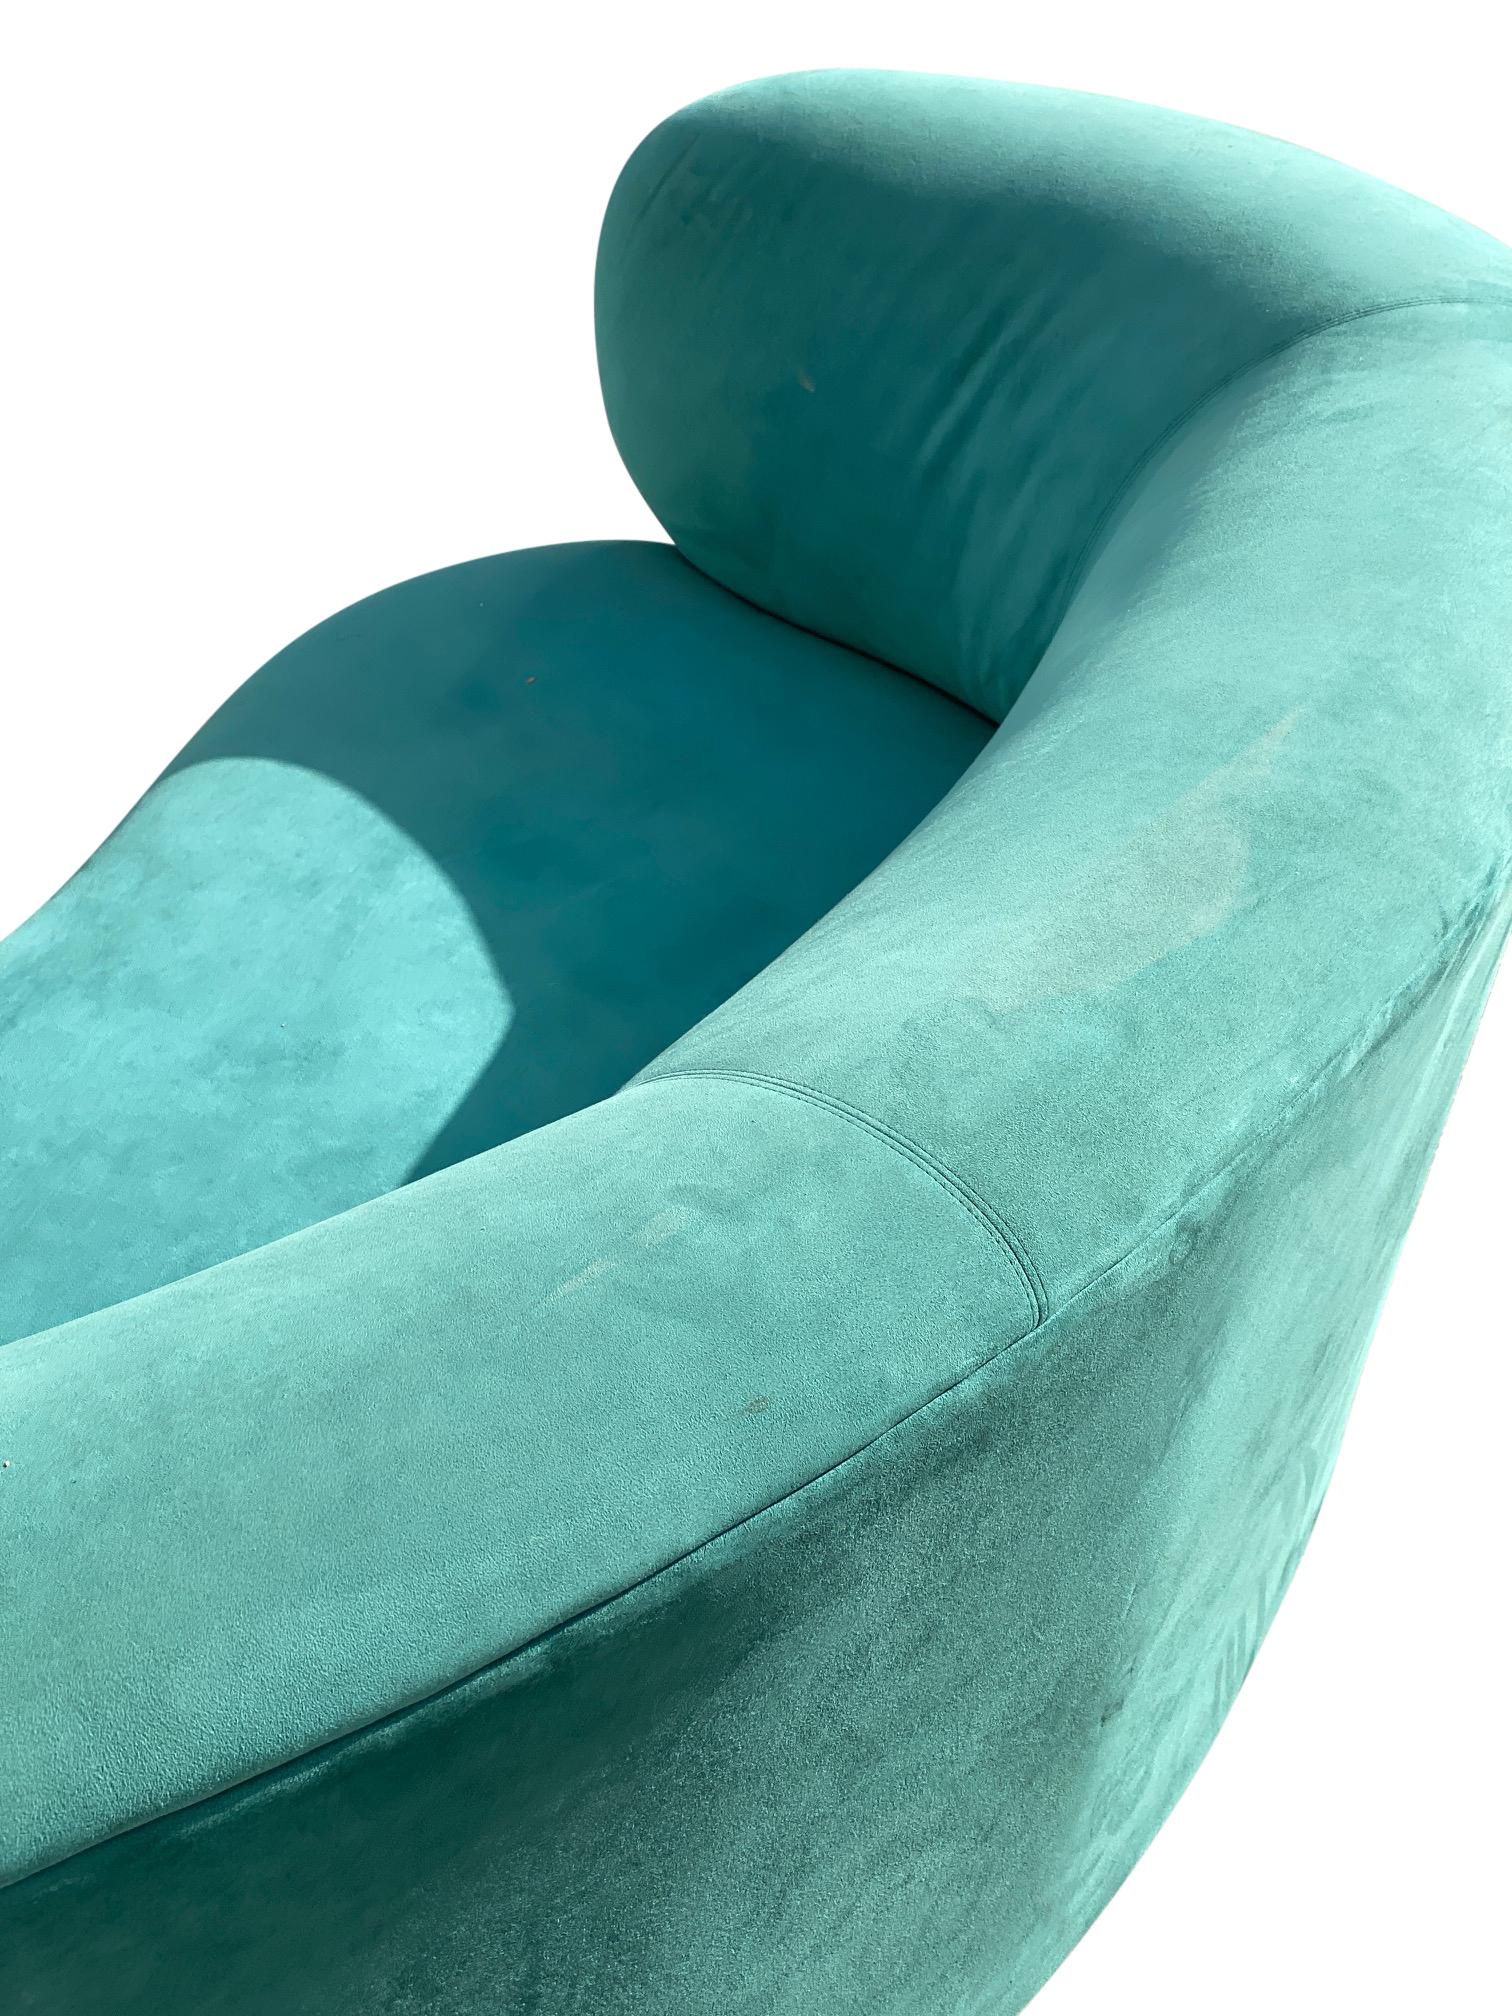 North American Vladimir Kagan Curved Cloud Sofa Sectional 3 Piece